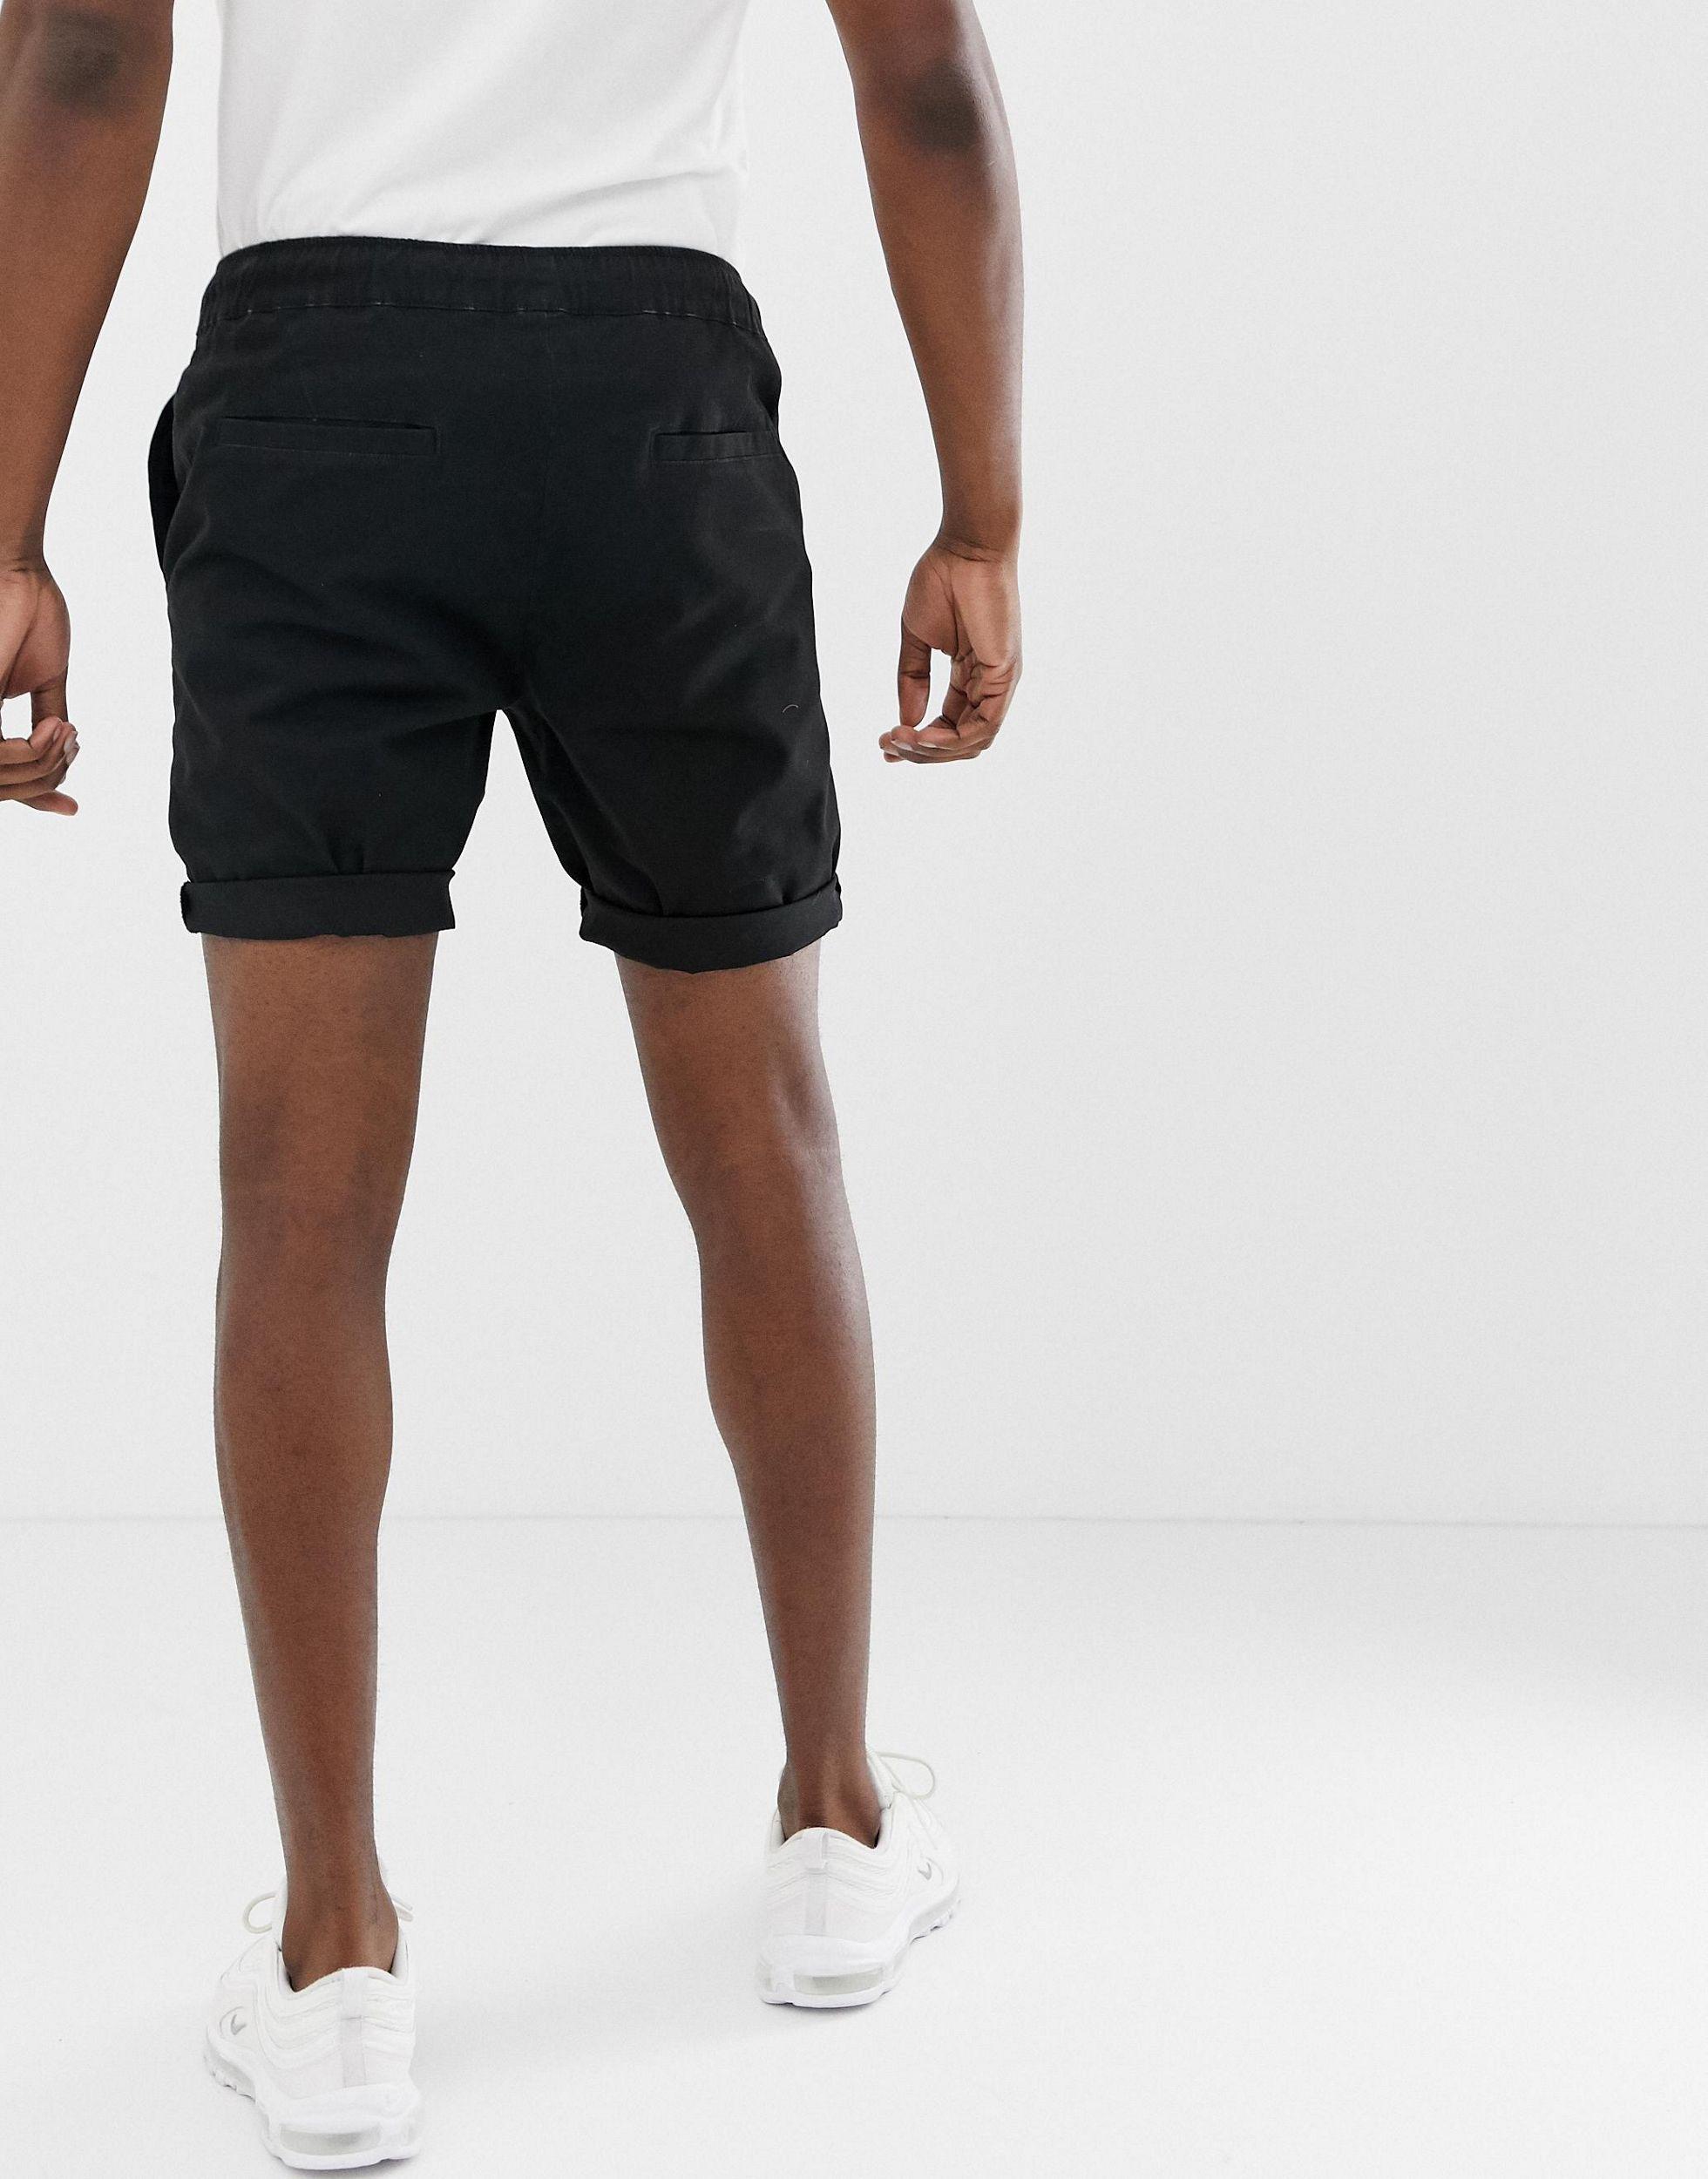 ASOS Design Jersey Slim Shorts in Shorter Length in Black